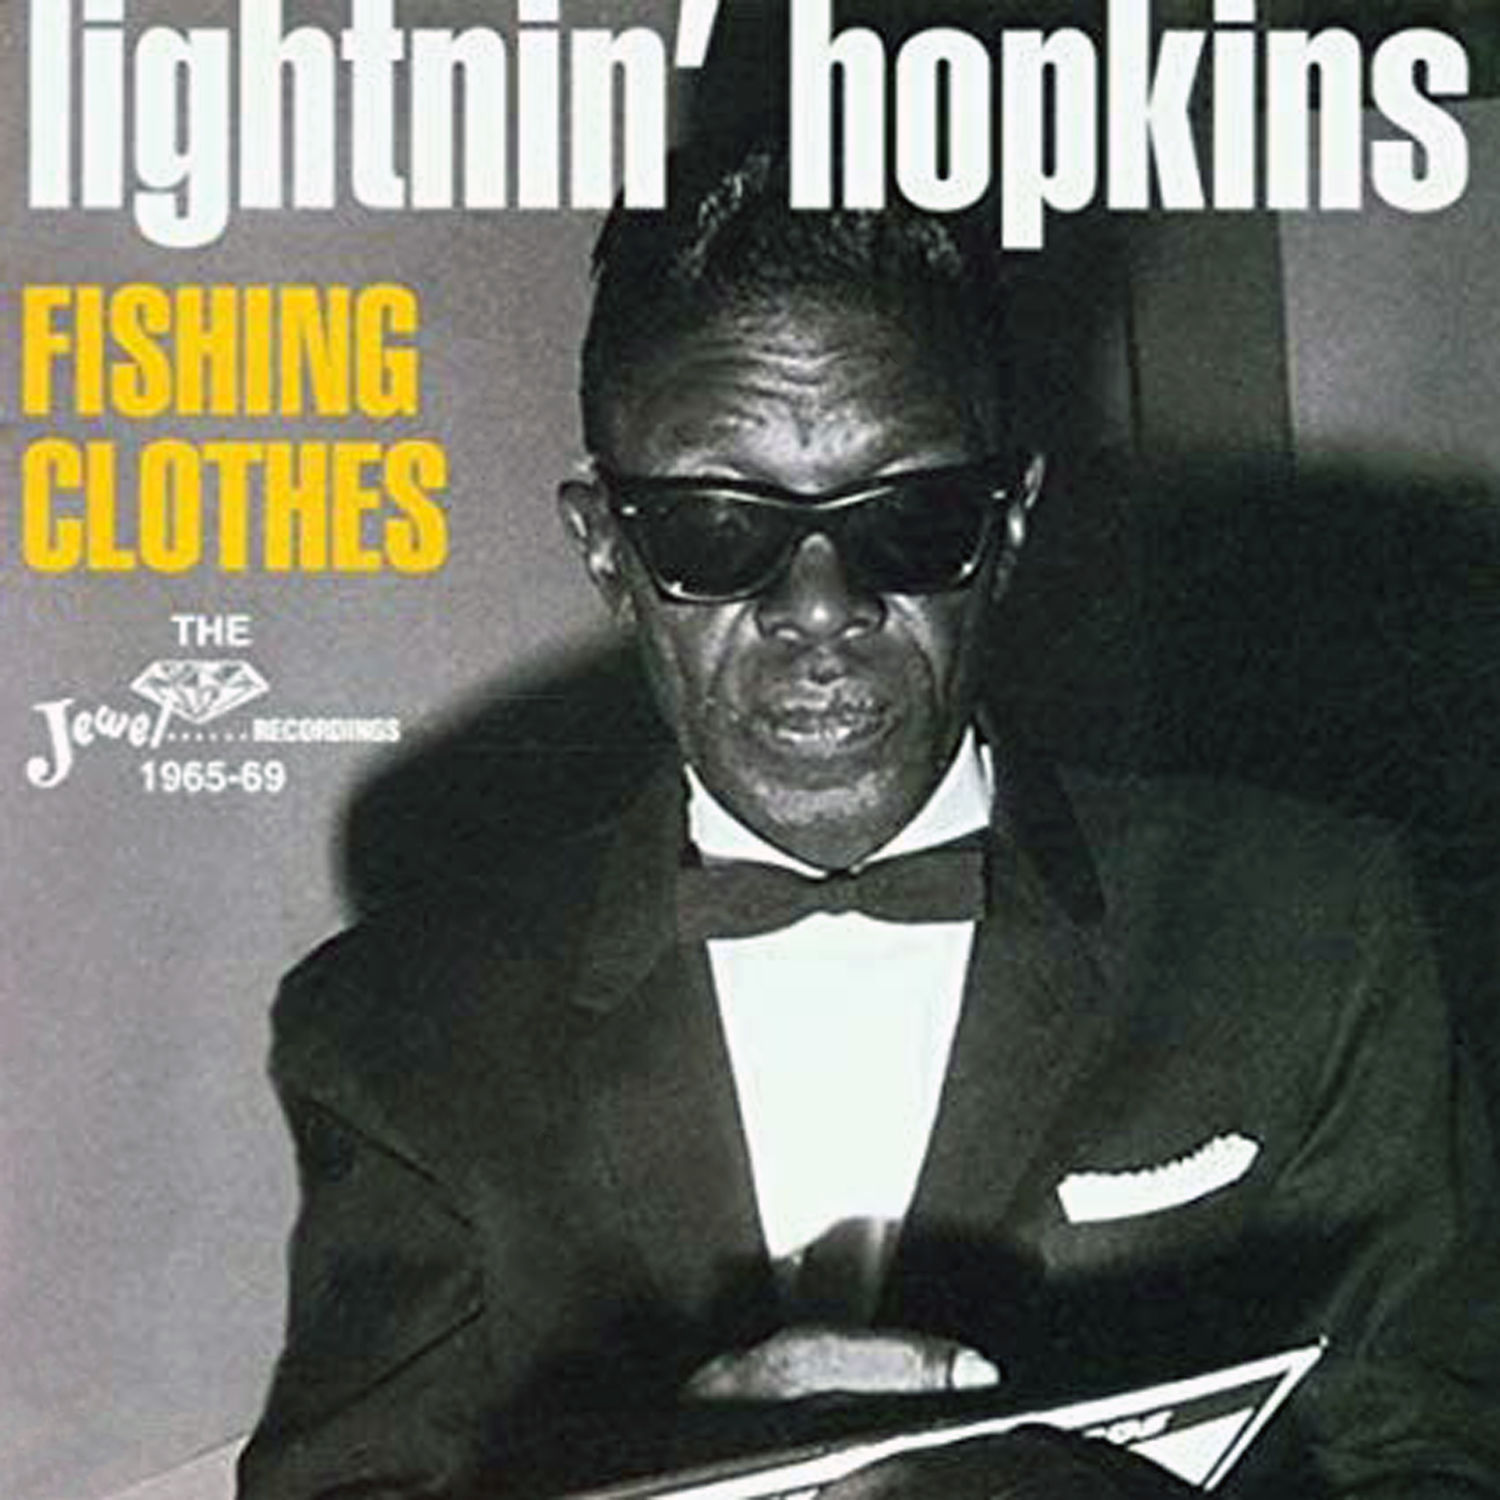 Lightnin’ Hopkins – Fishing Clothes, Vol. 2 (1968) [FLAC 24bit/44,1kHz]